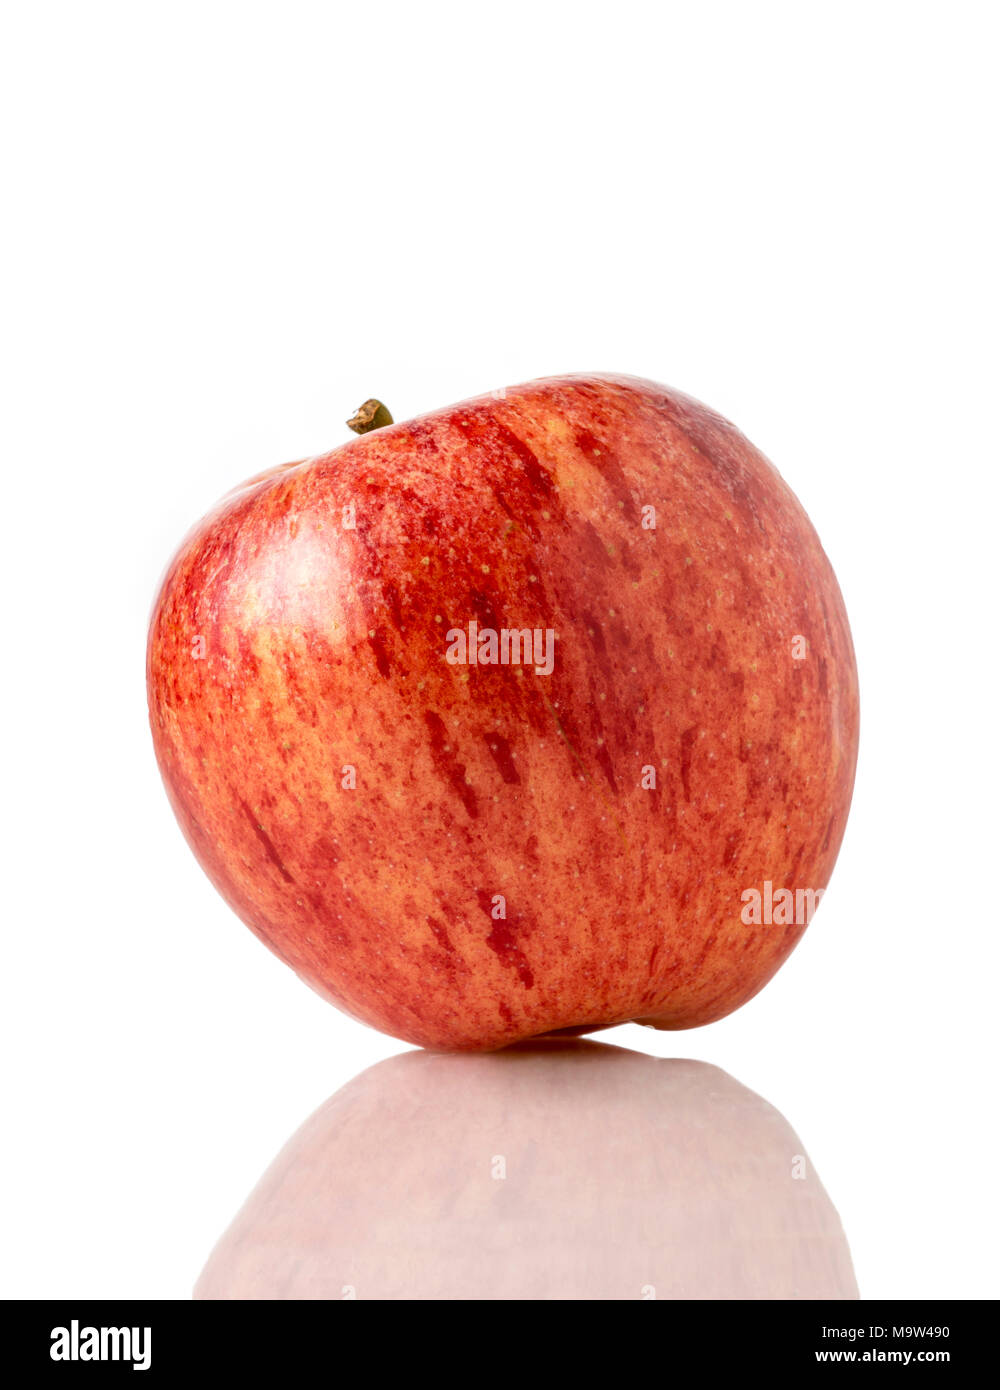 Closeup photo of an Apple on white background Stock Photo